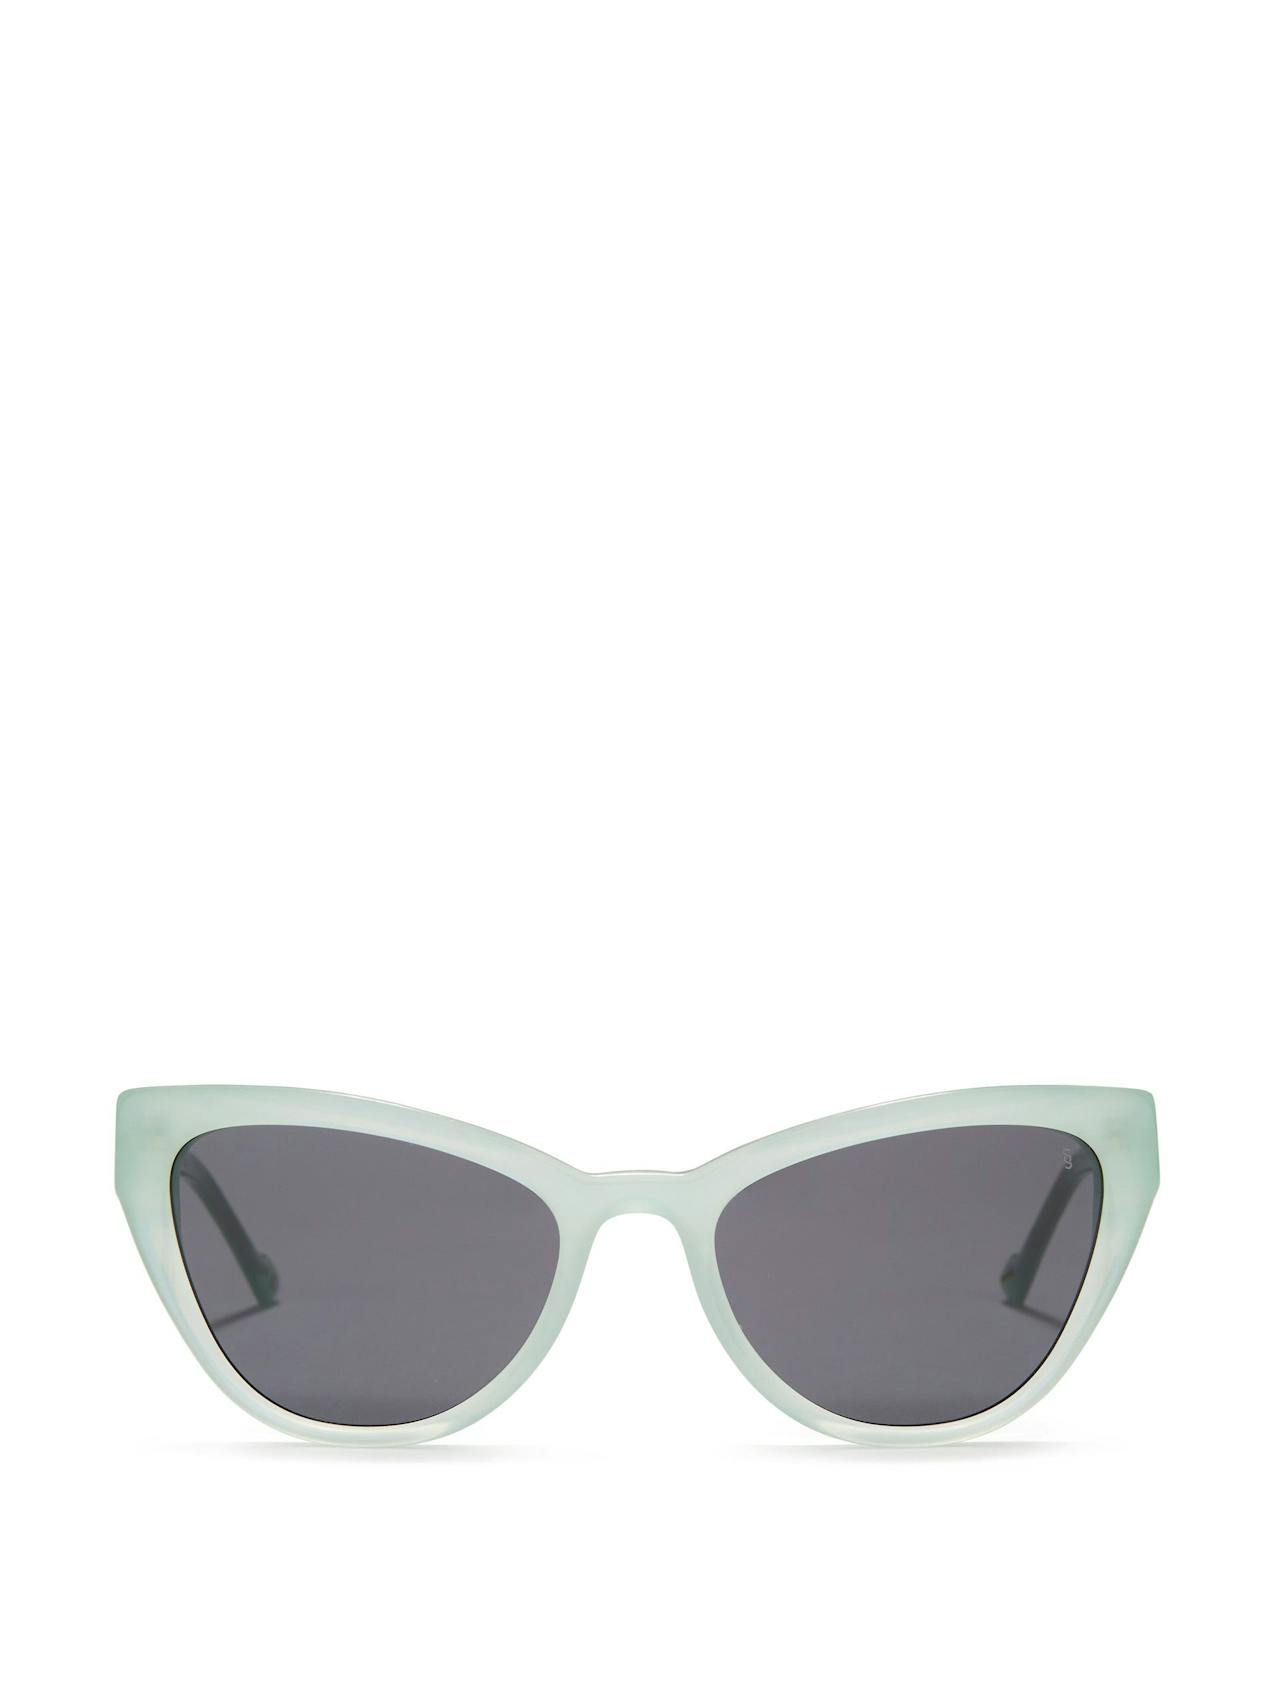 Mint Asteria sunglasses